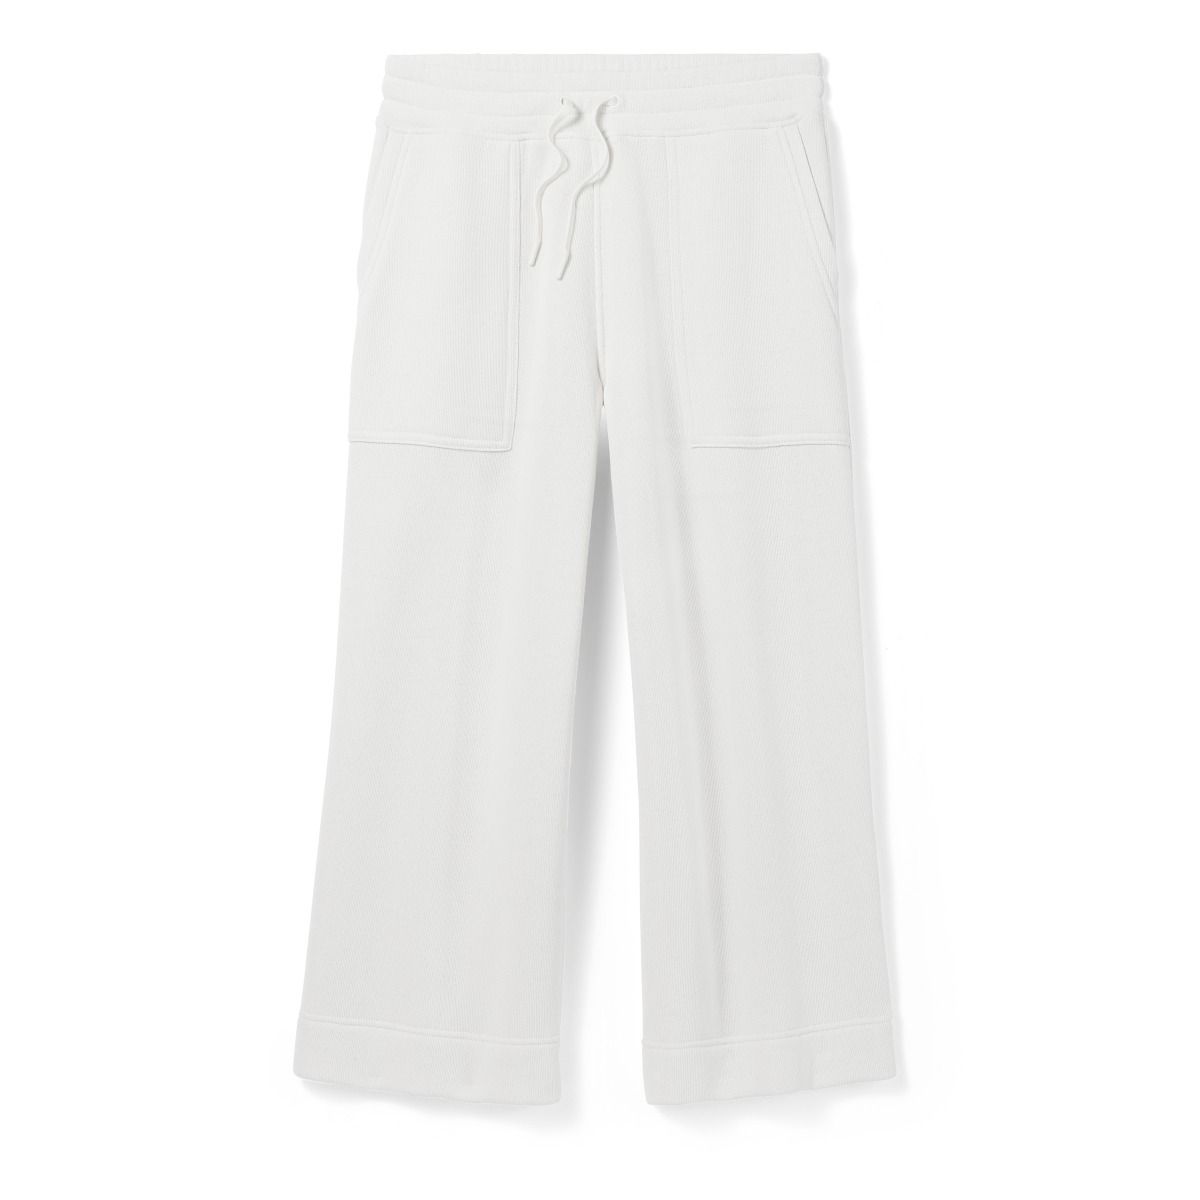 Rhythm Classic Wide Leg Pant White - Cotton Pants - Woven Pants - Lulus